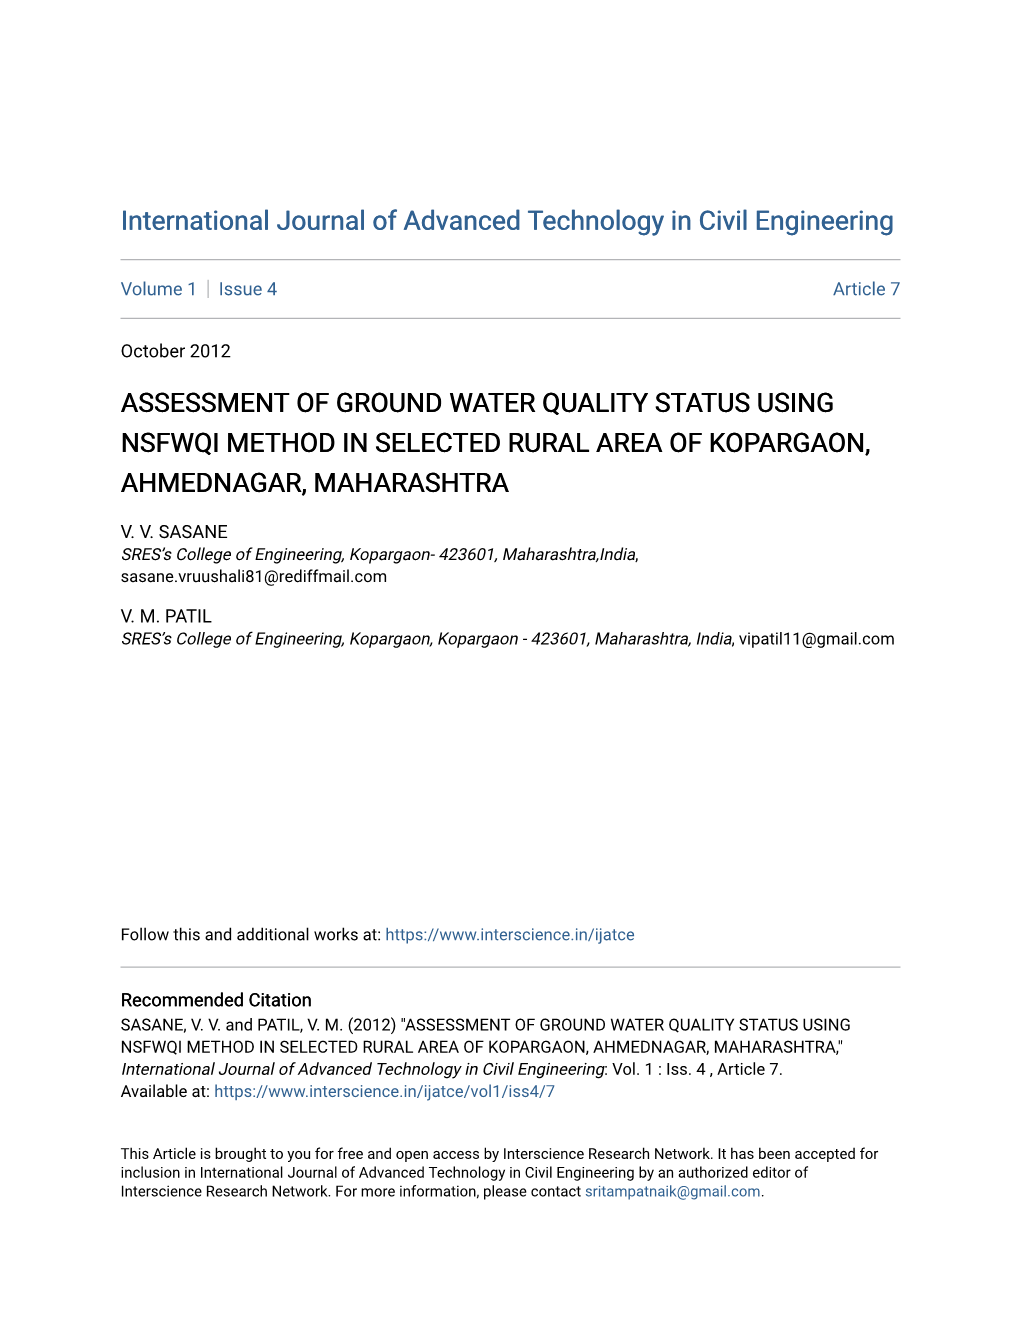 Assessment of Ground Water Quality Status Using Nsfwqi Method in Selected Rural Area of Kopargaon, Ahmednagar, Maharashtra